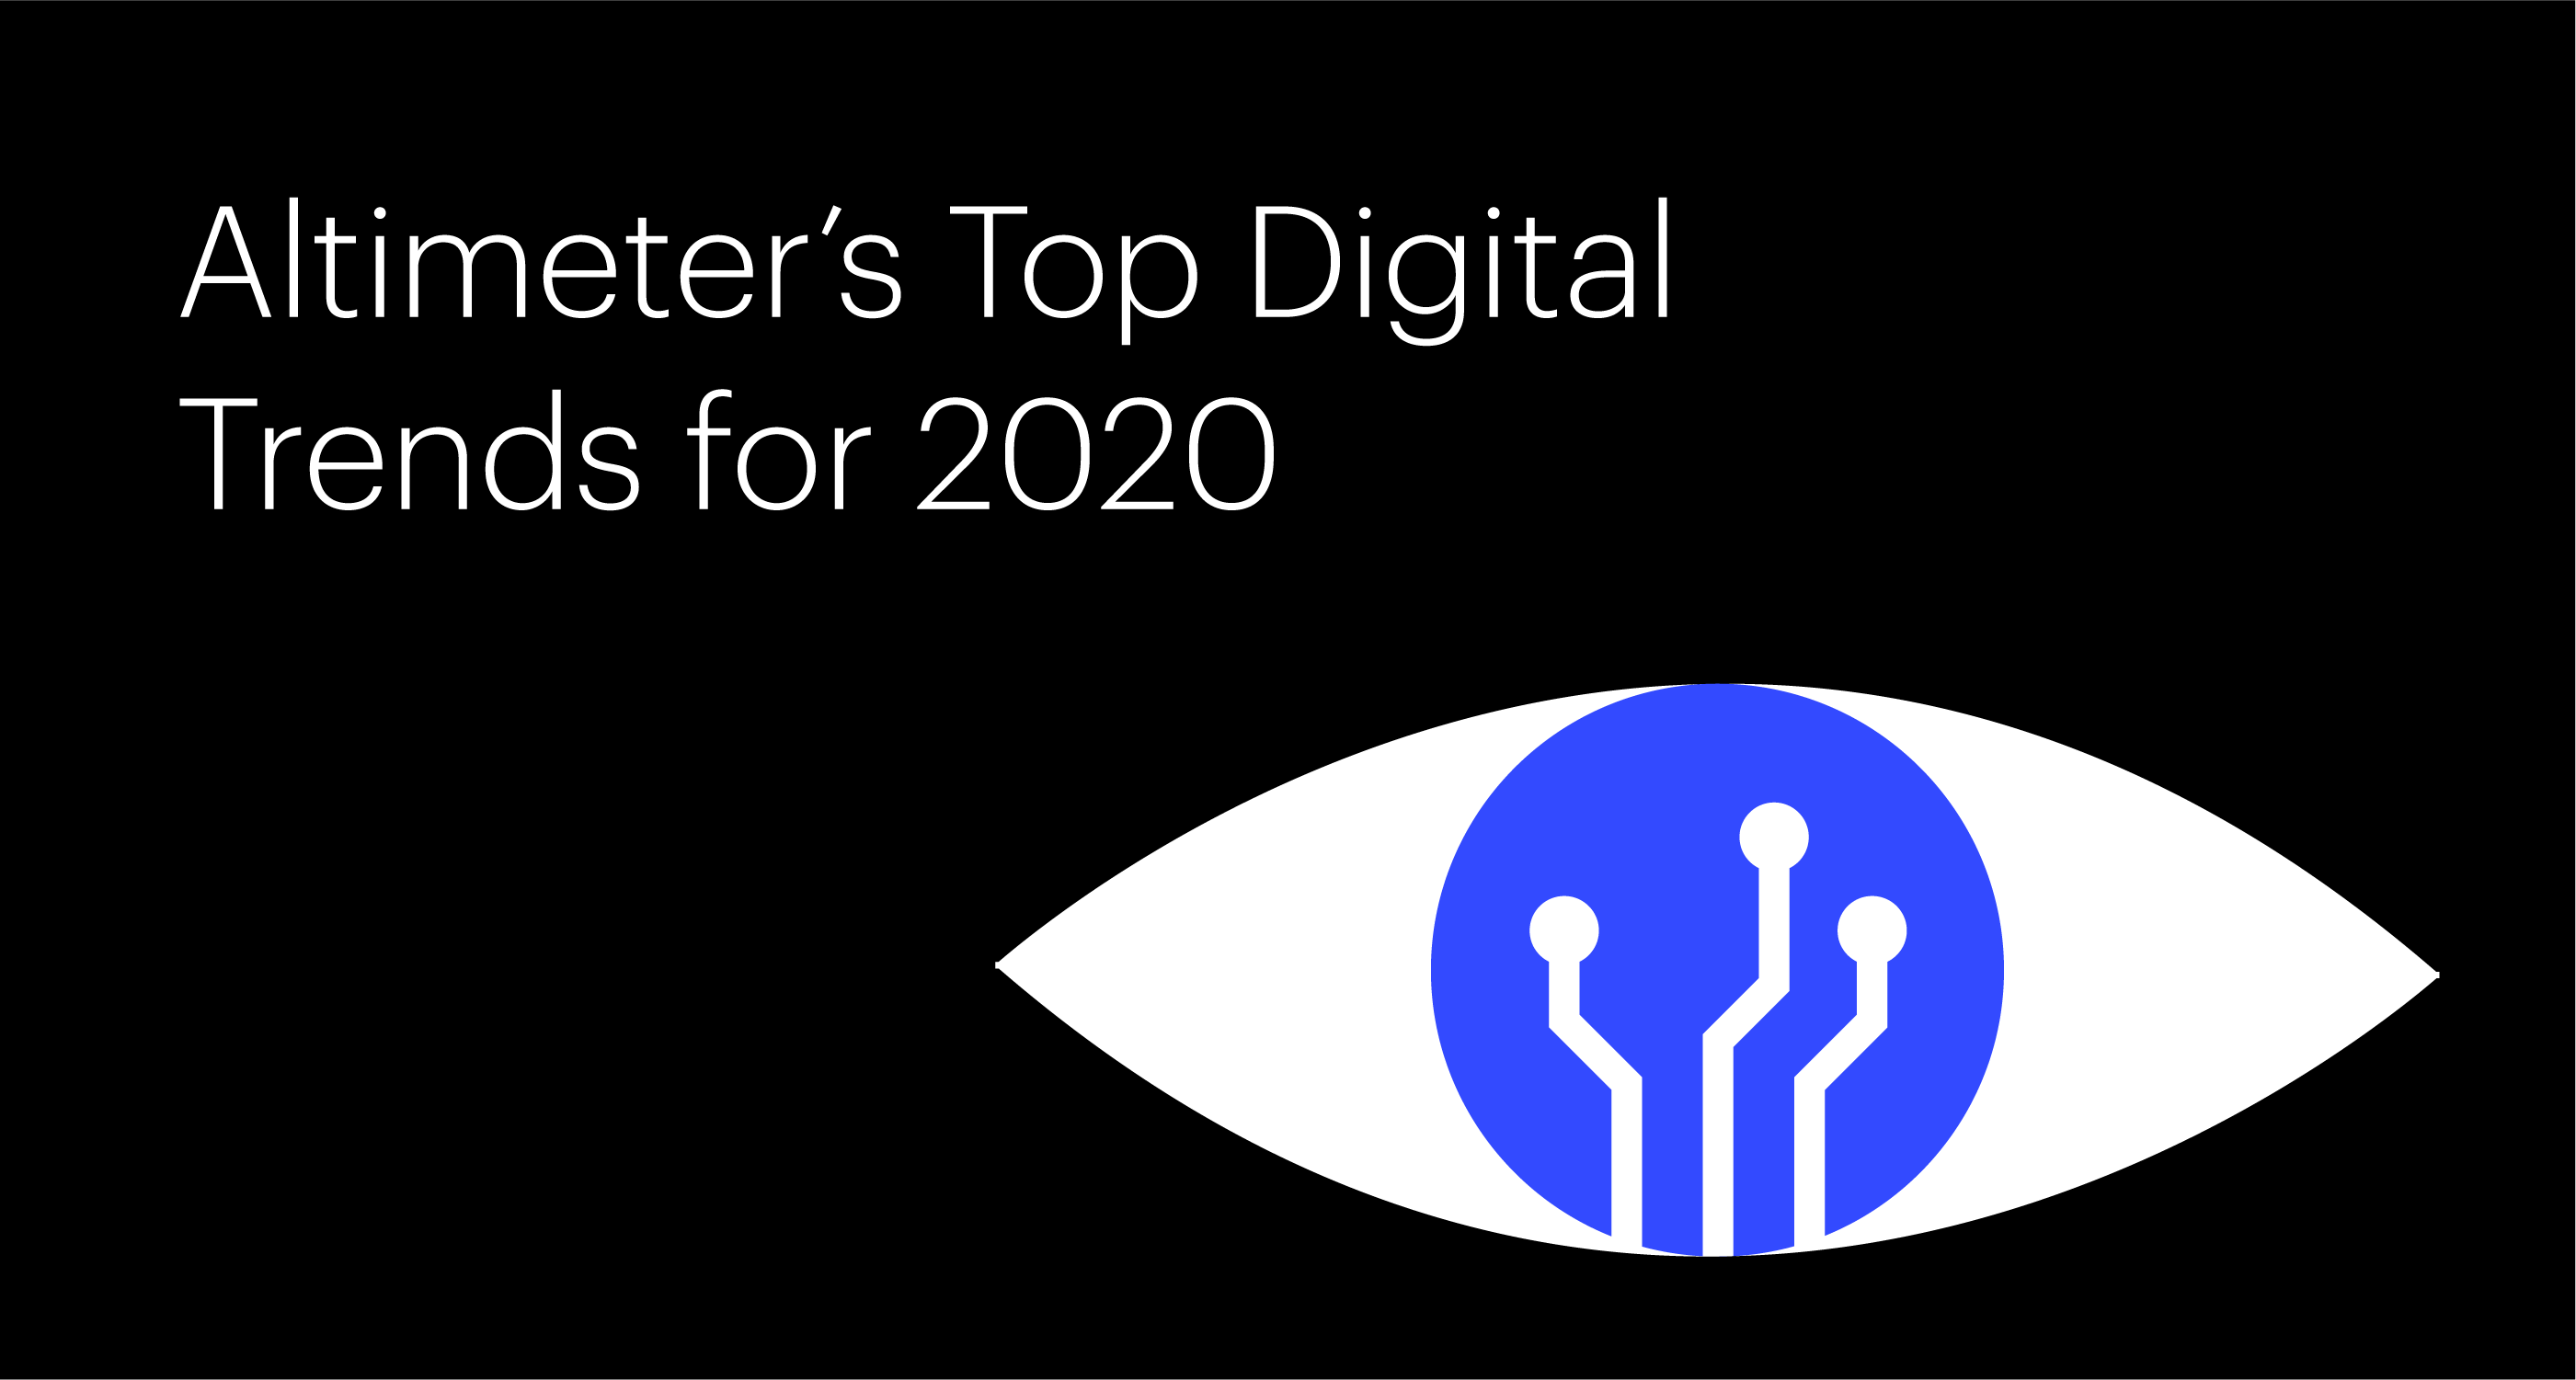 Altimeter's top digital trends for 2020